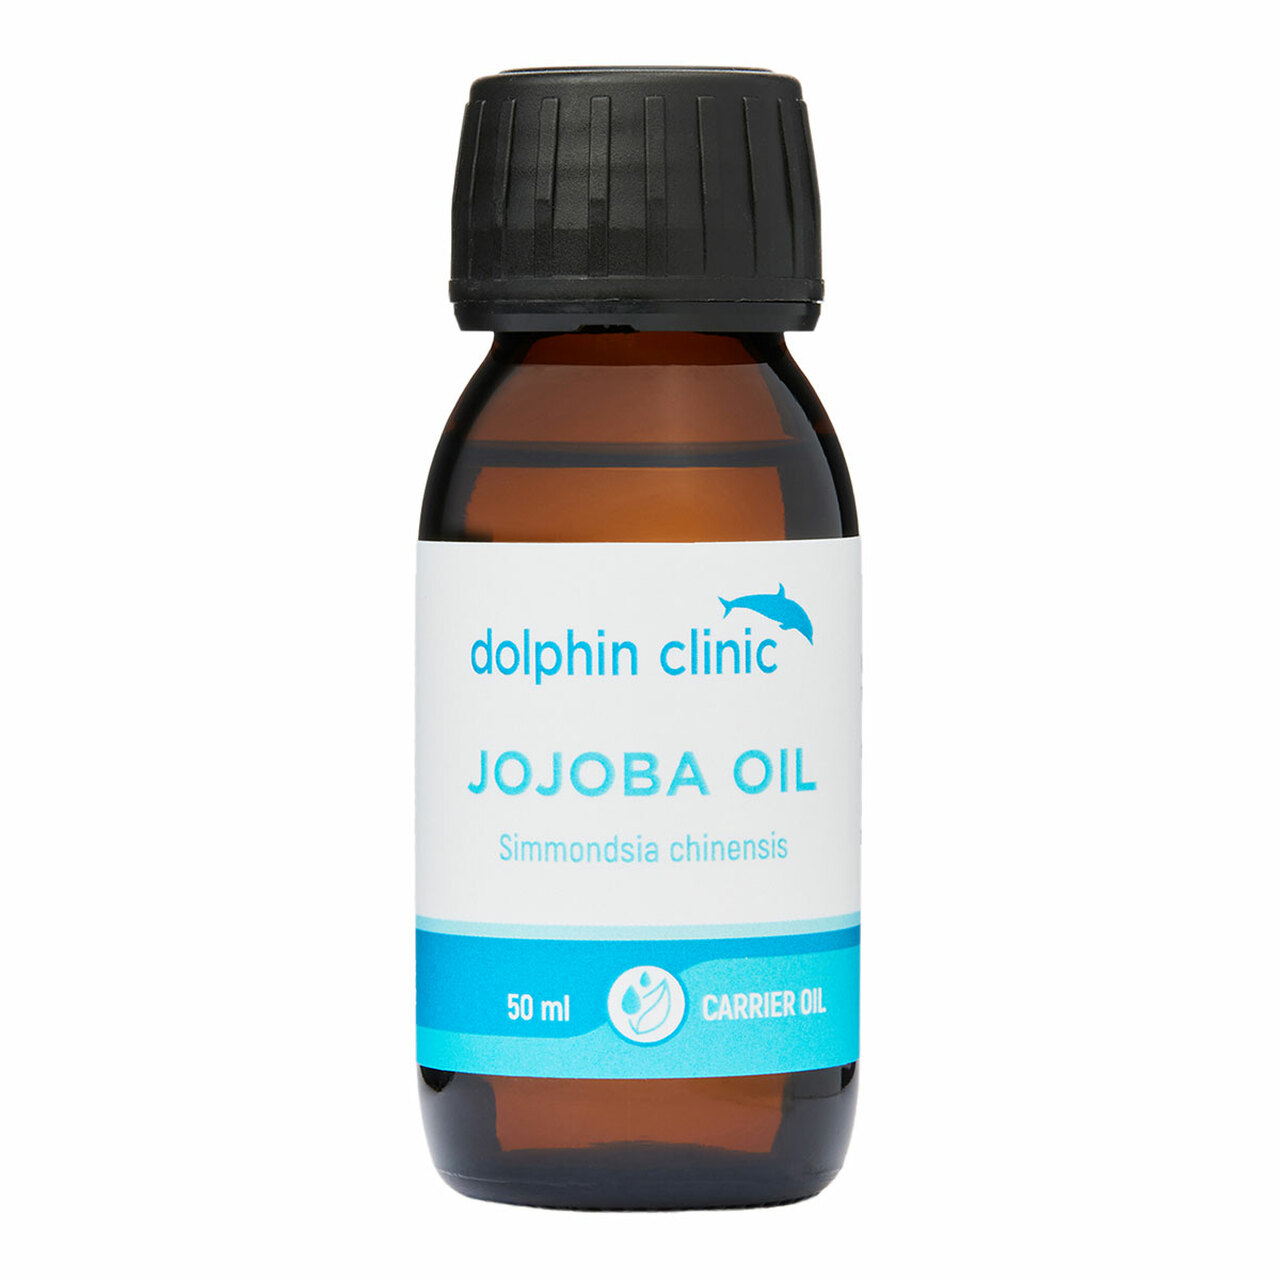 Dolphin Clinic Jojoba Oil 50ml